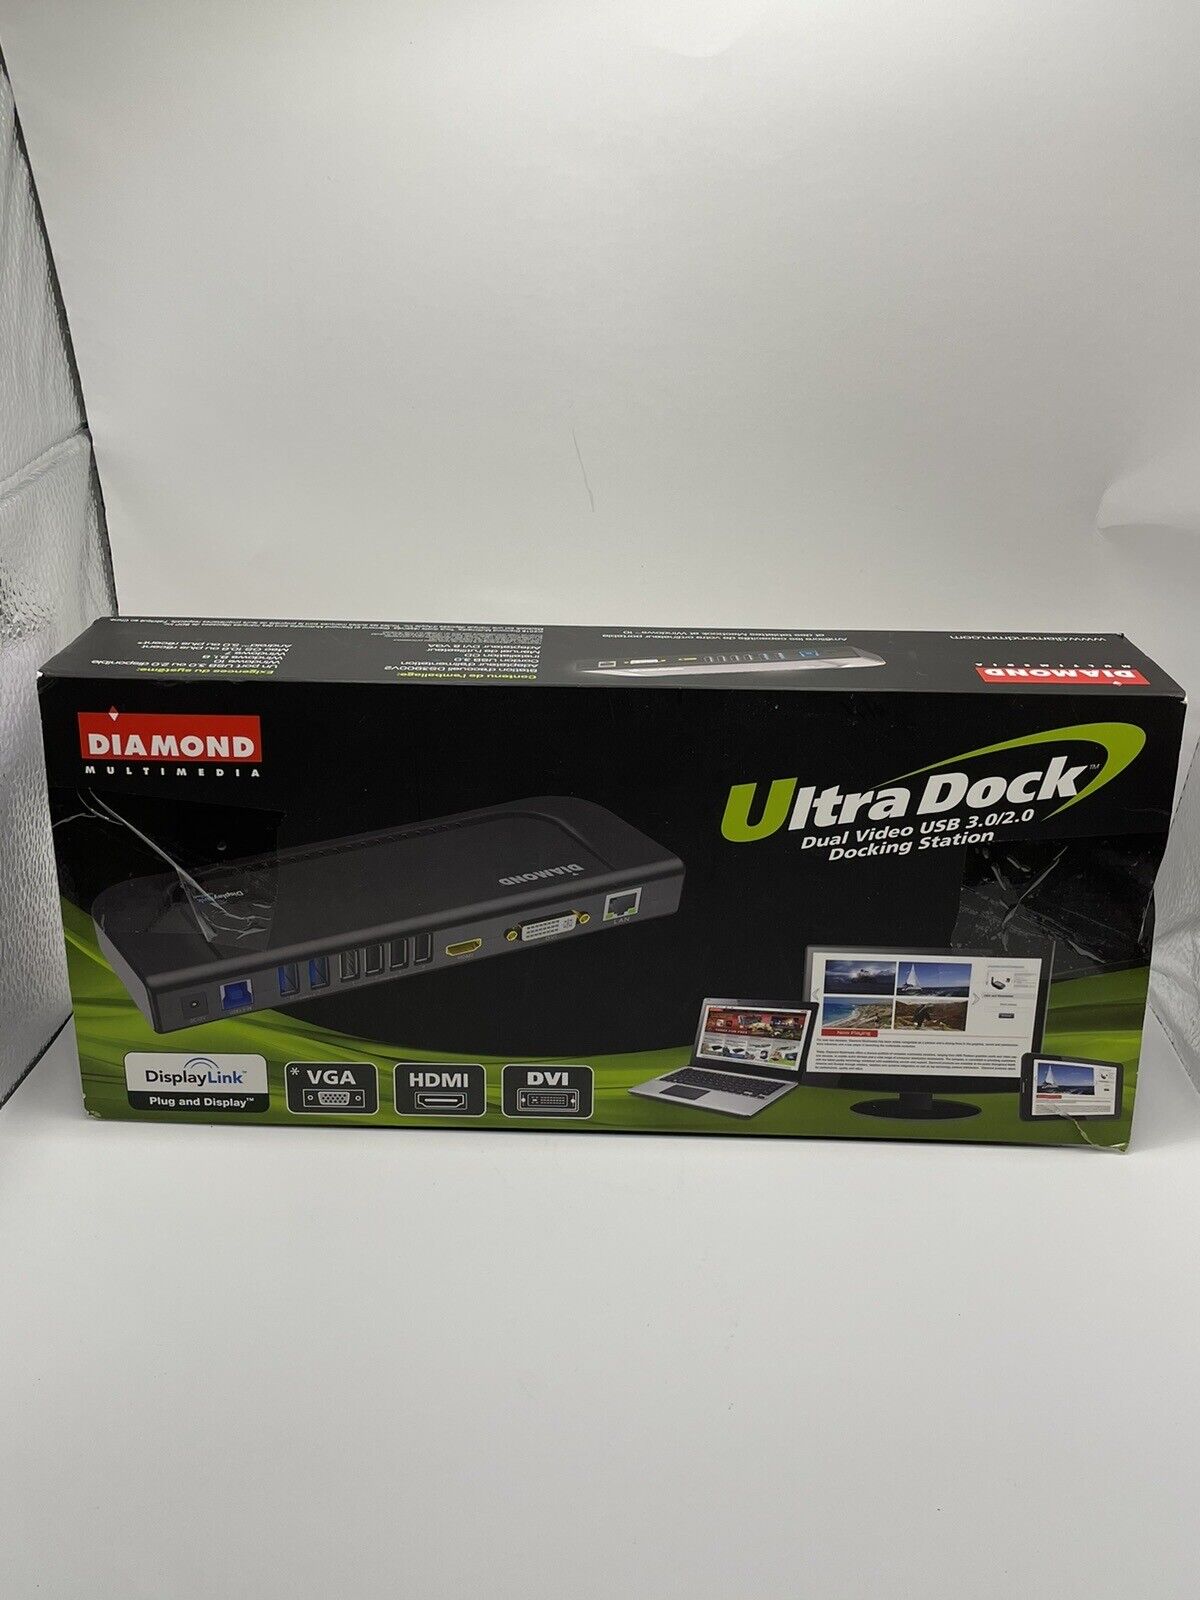 Diamond Multimedia UltraDock Dual Video USB 3.0/2.0 Docking Station